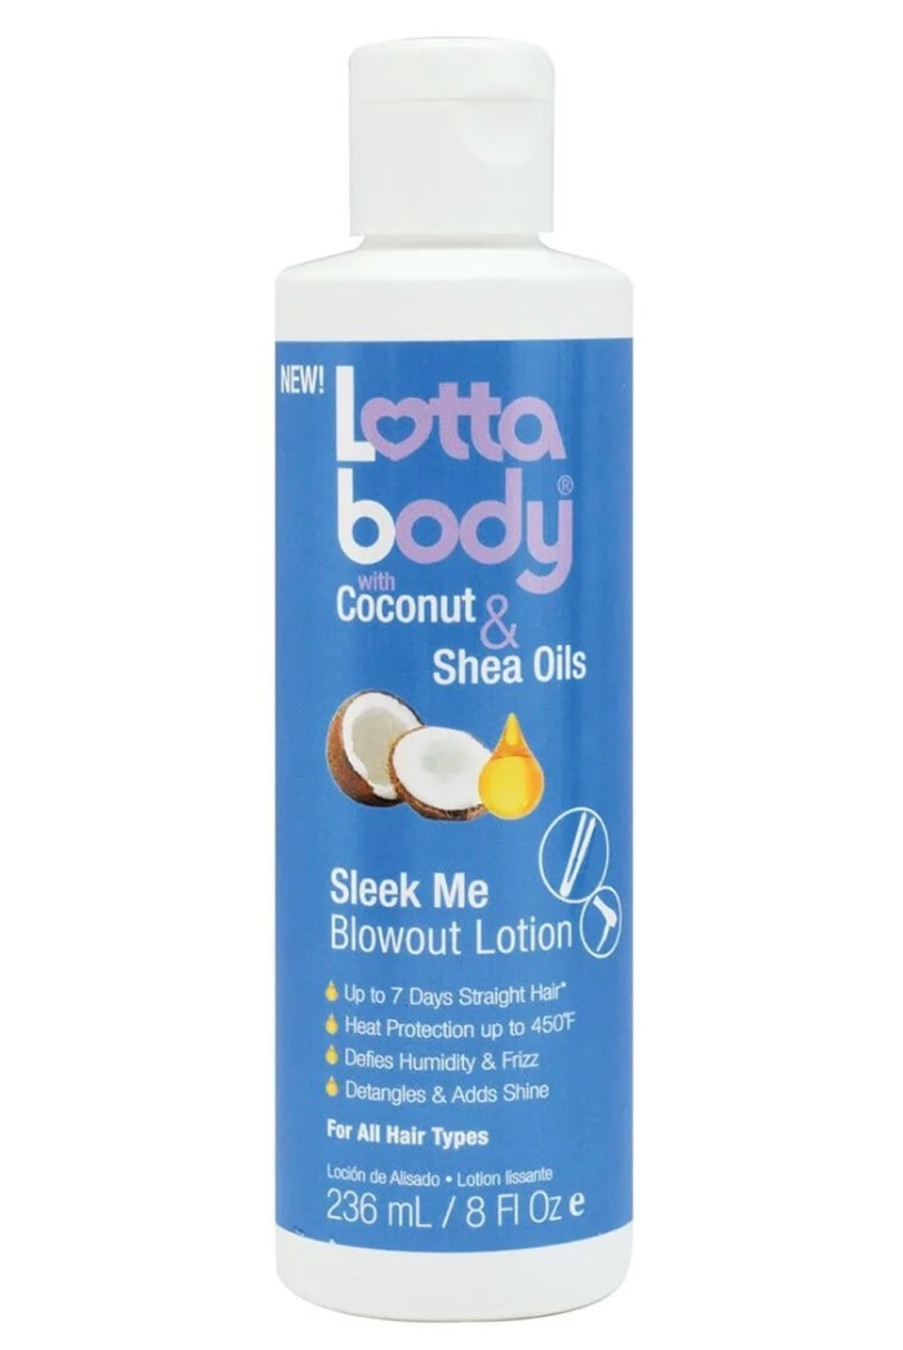 Lottabody Coconut and Shea Oils Sleek Me Blowout Lotion